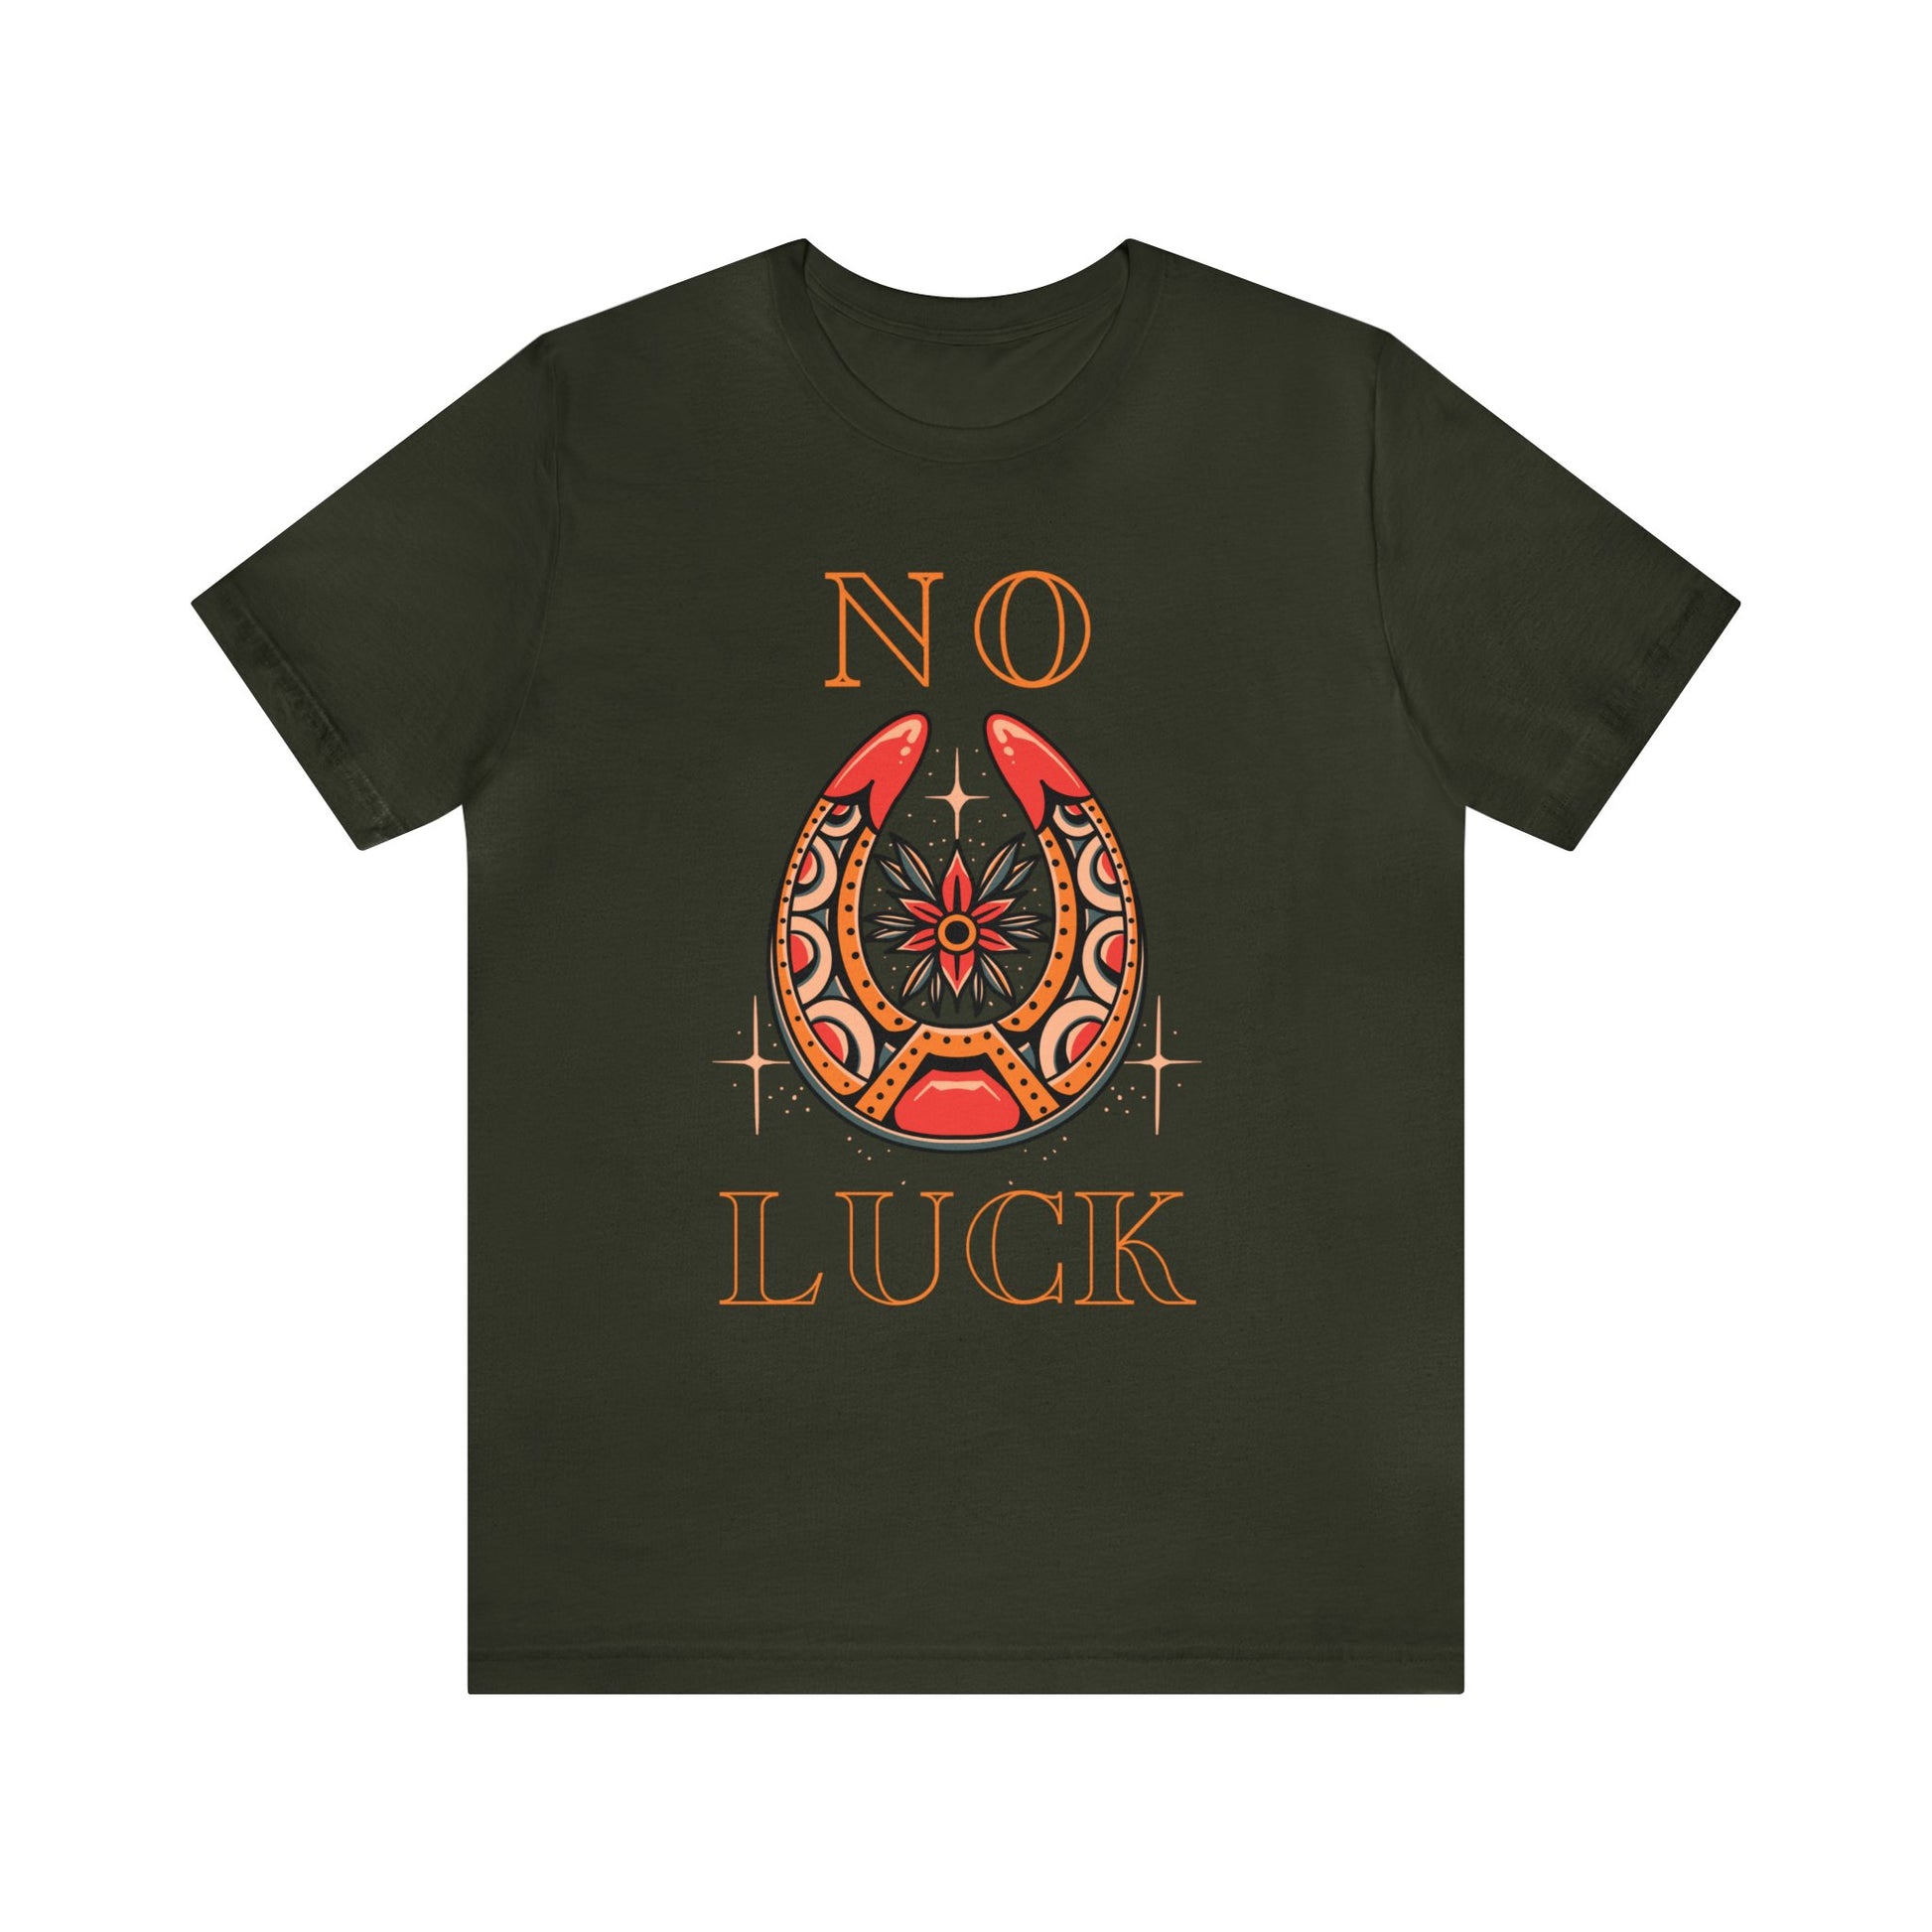 No Luck Tattoo T-shirt / Traditional Tattoo Tee Shirt / Punk Rock Clothing Tshirt Rockabilly Psychobilly Freak Goth - Foxlark Crystal Jewelry